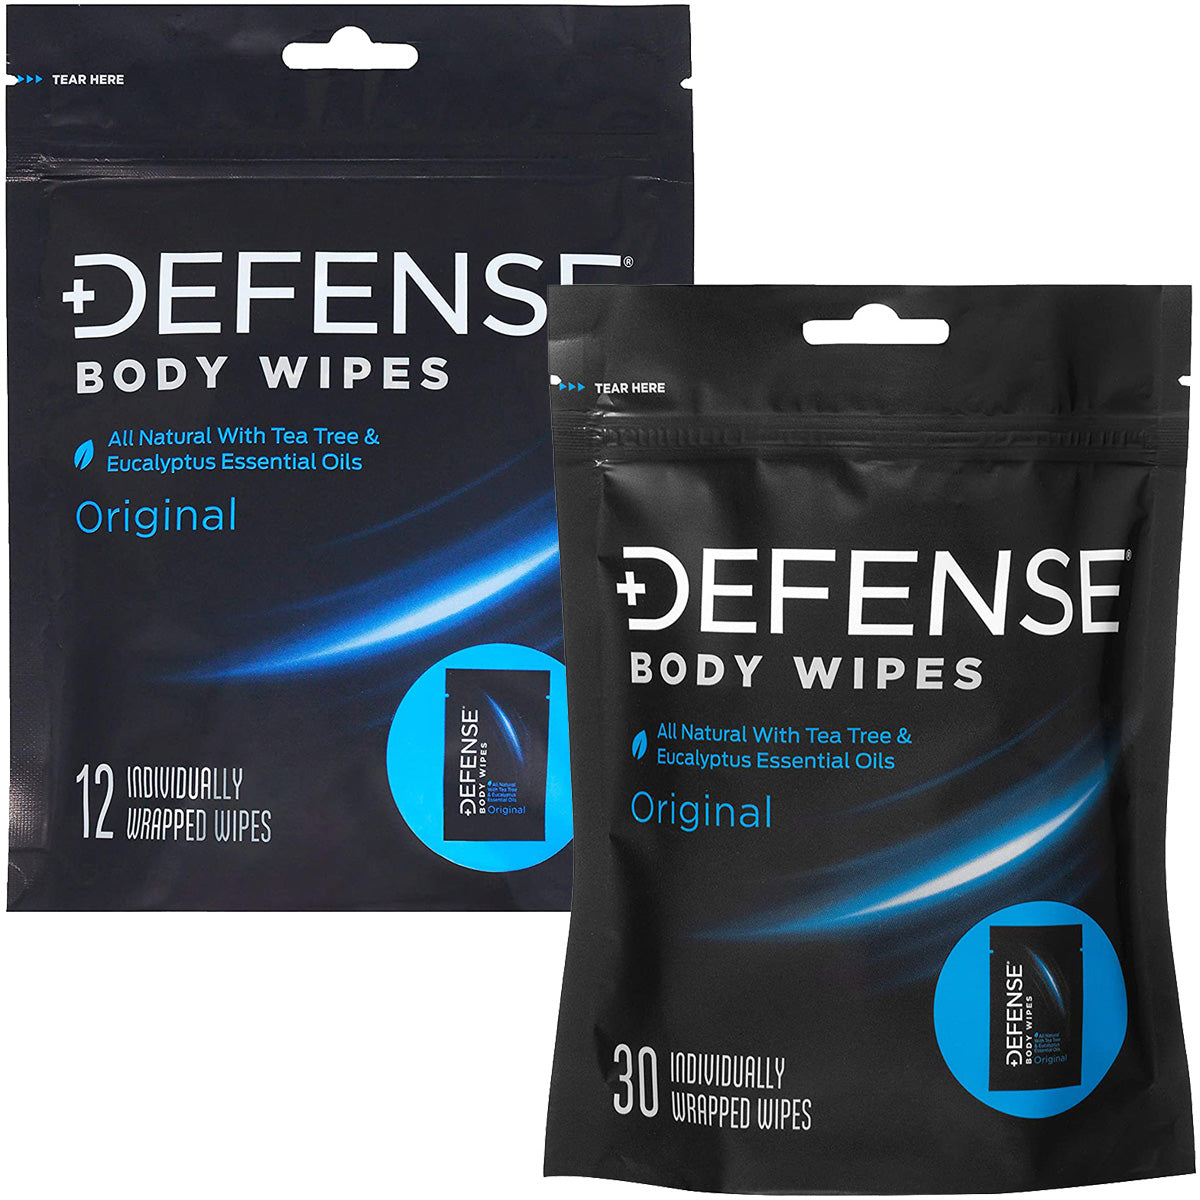 Defense Soap Original Body Wipes Defense Soap